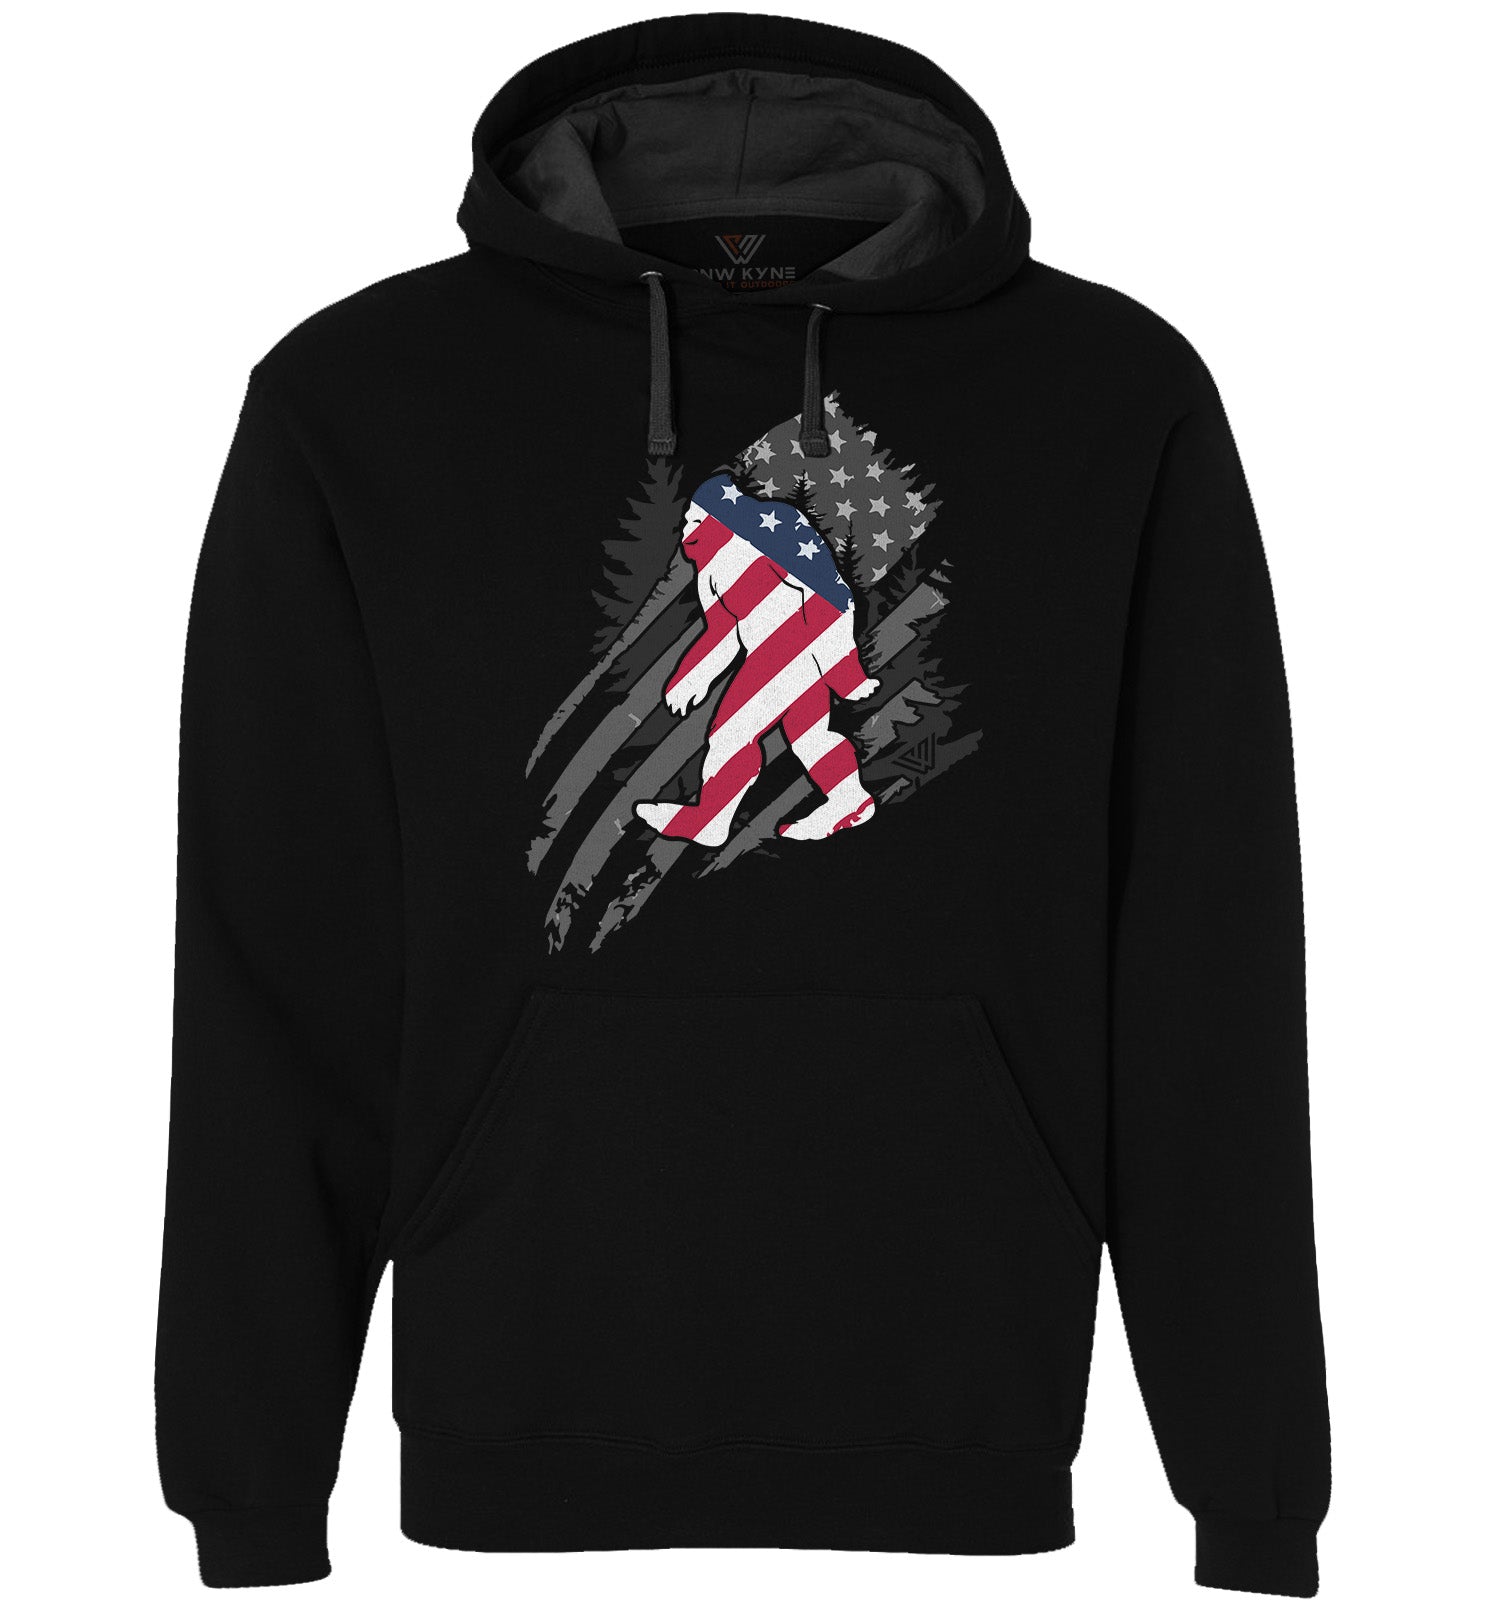 Bigfoot Sweatshirt - Patriotic - Pullover Hoodie - Front - Black